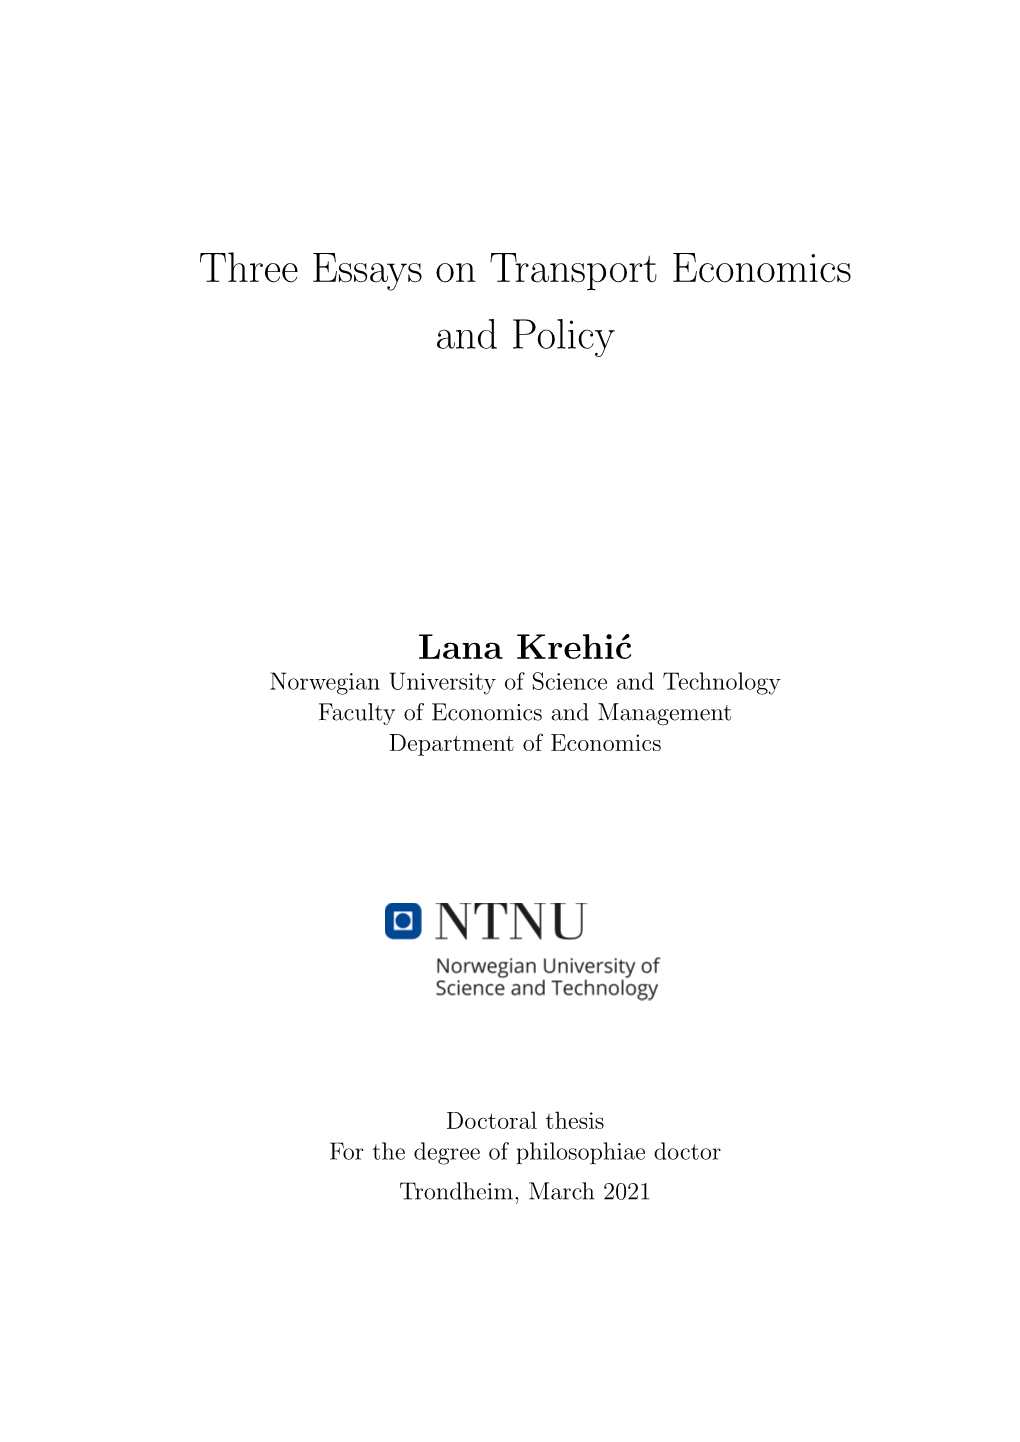 Three Essays on Transport Economics and Policy